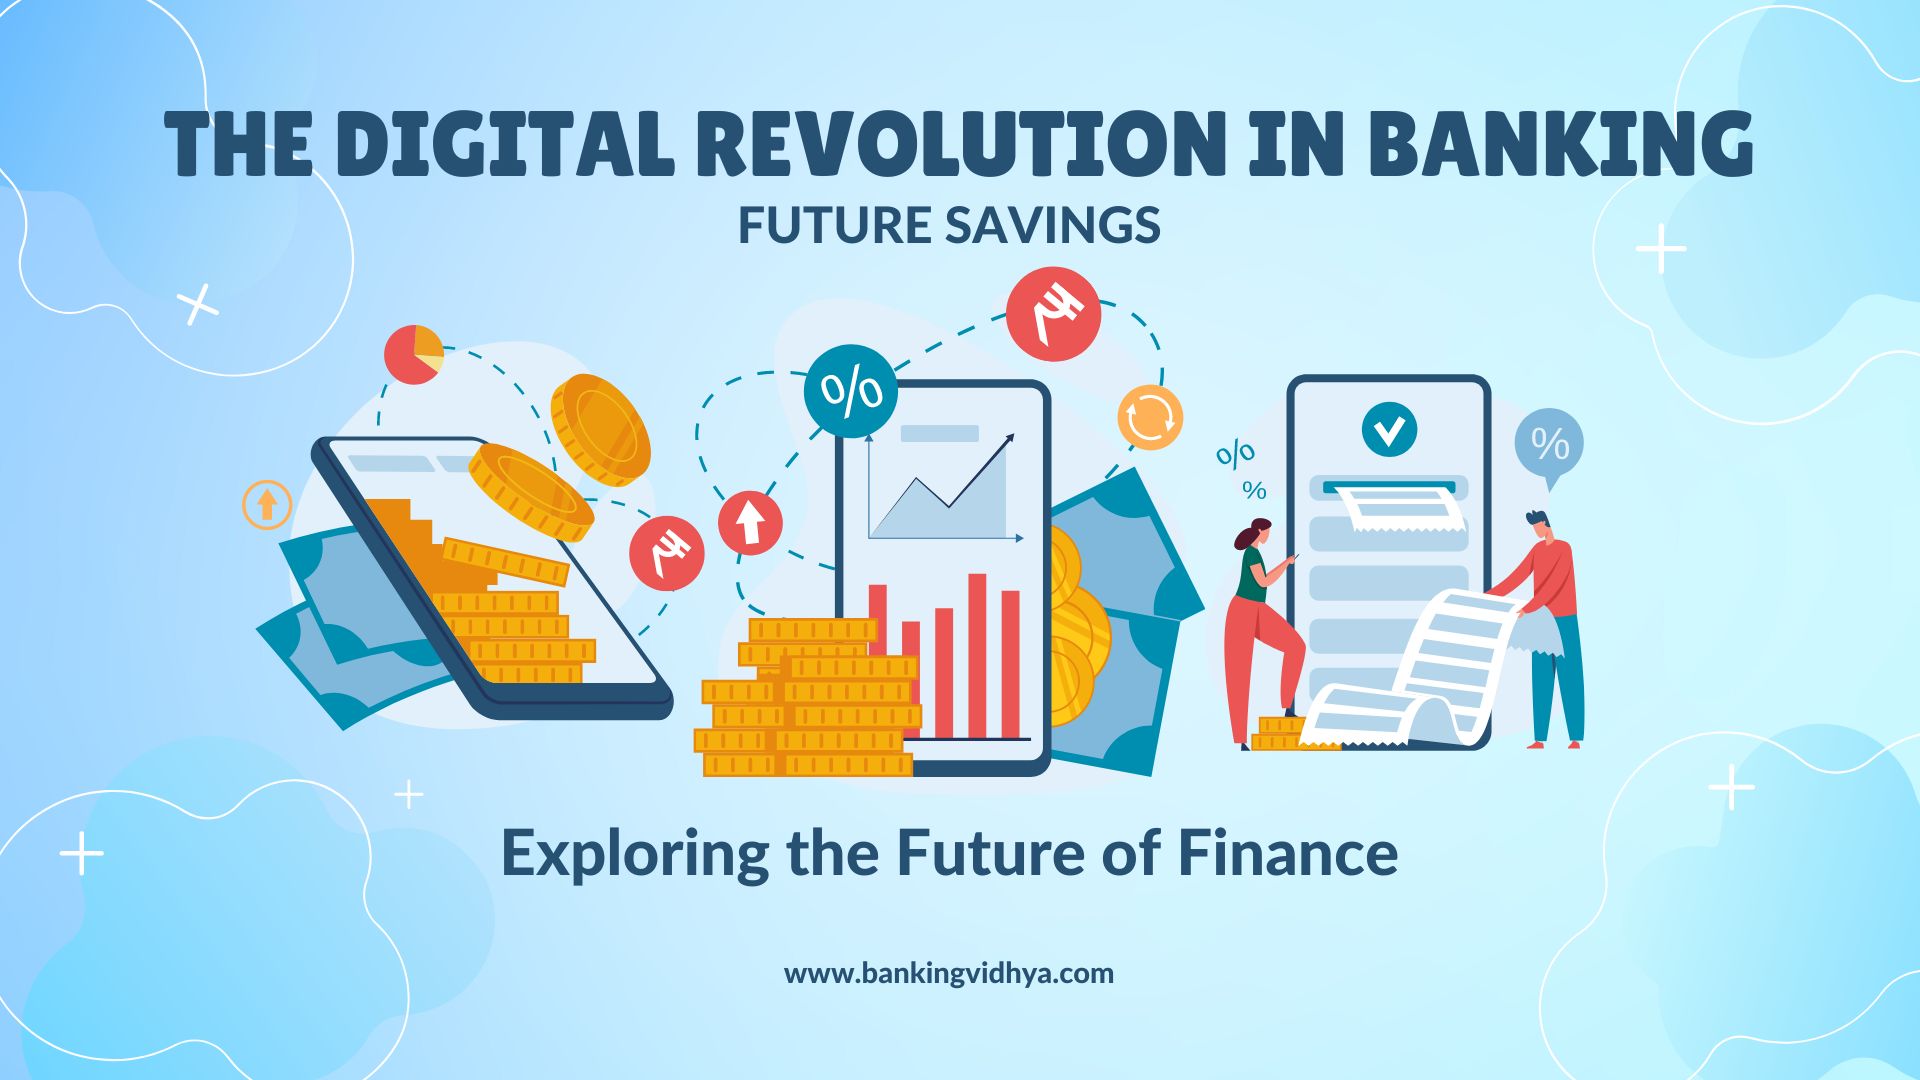 Embracing Digital Transformation in Banking